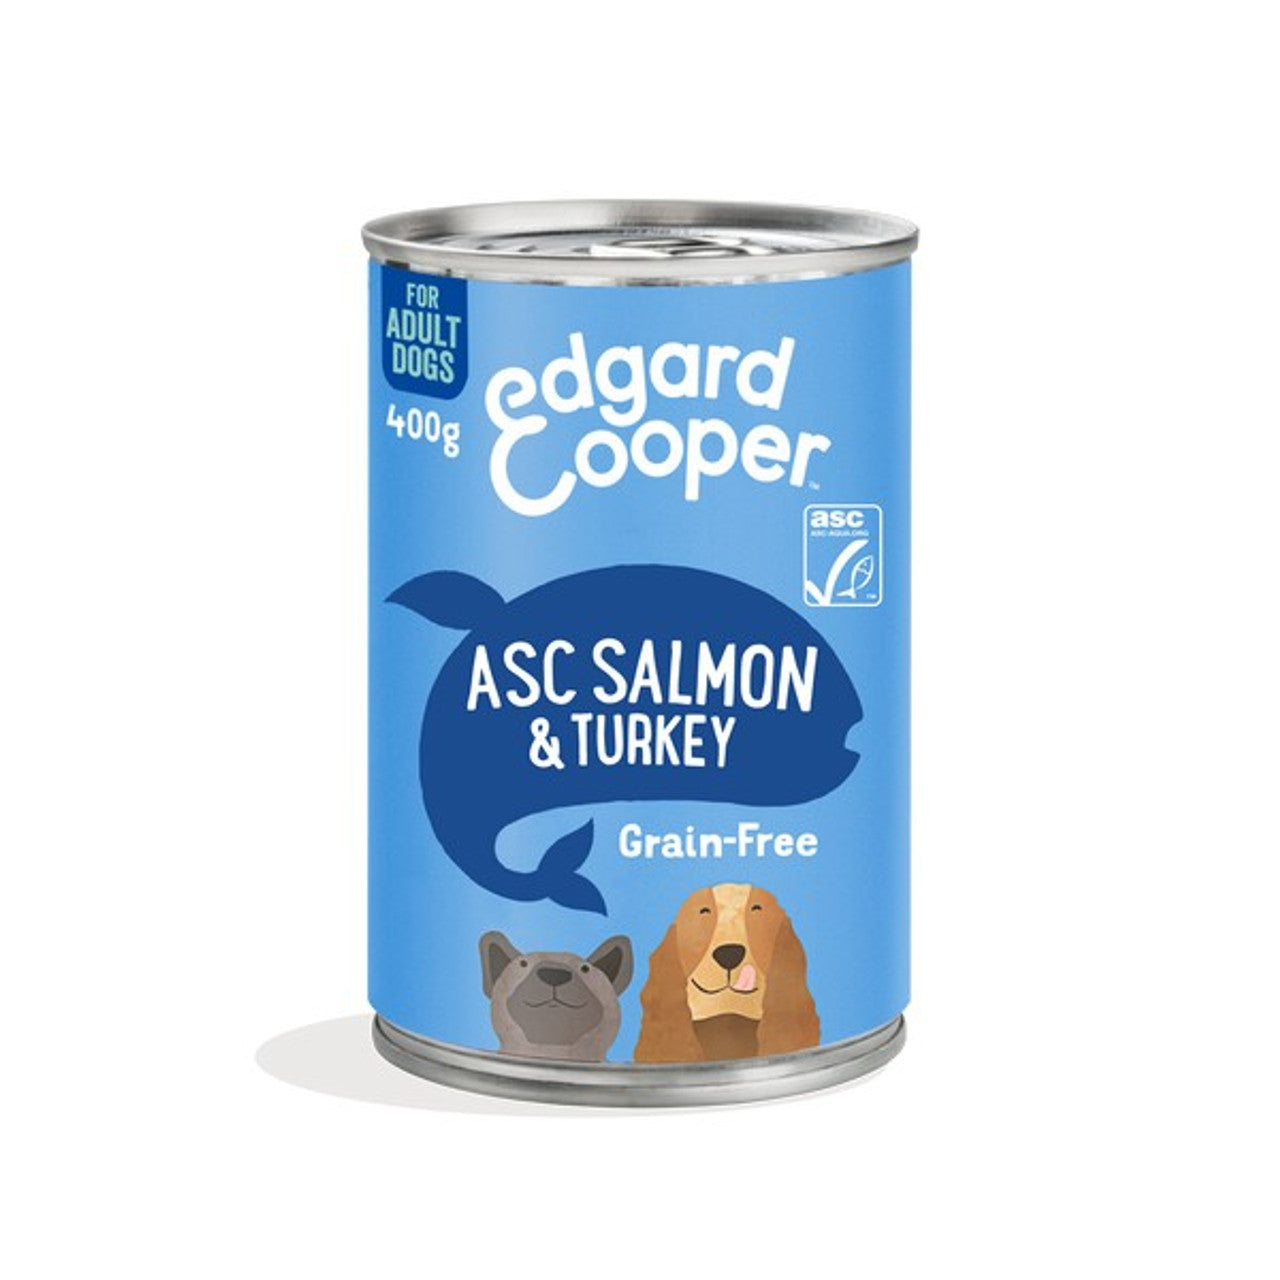 Edgard & Cooper Wet Tin for Dogs in Salmon & Turkey 6 x 400g